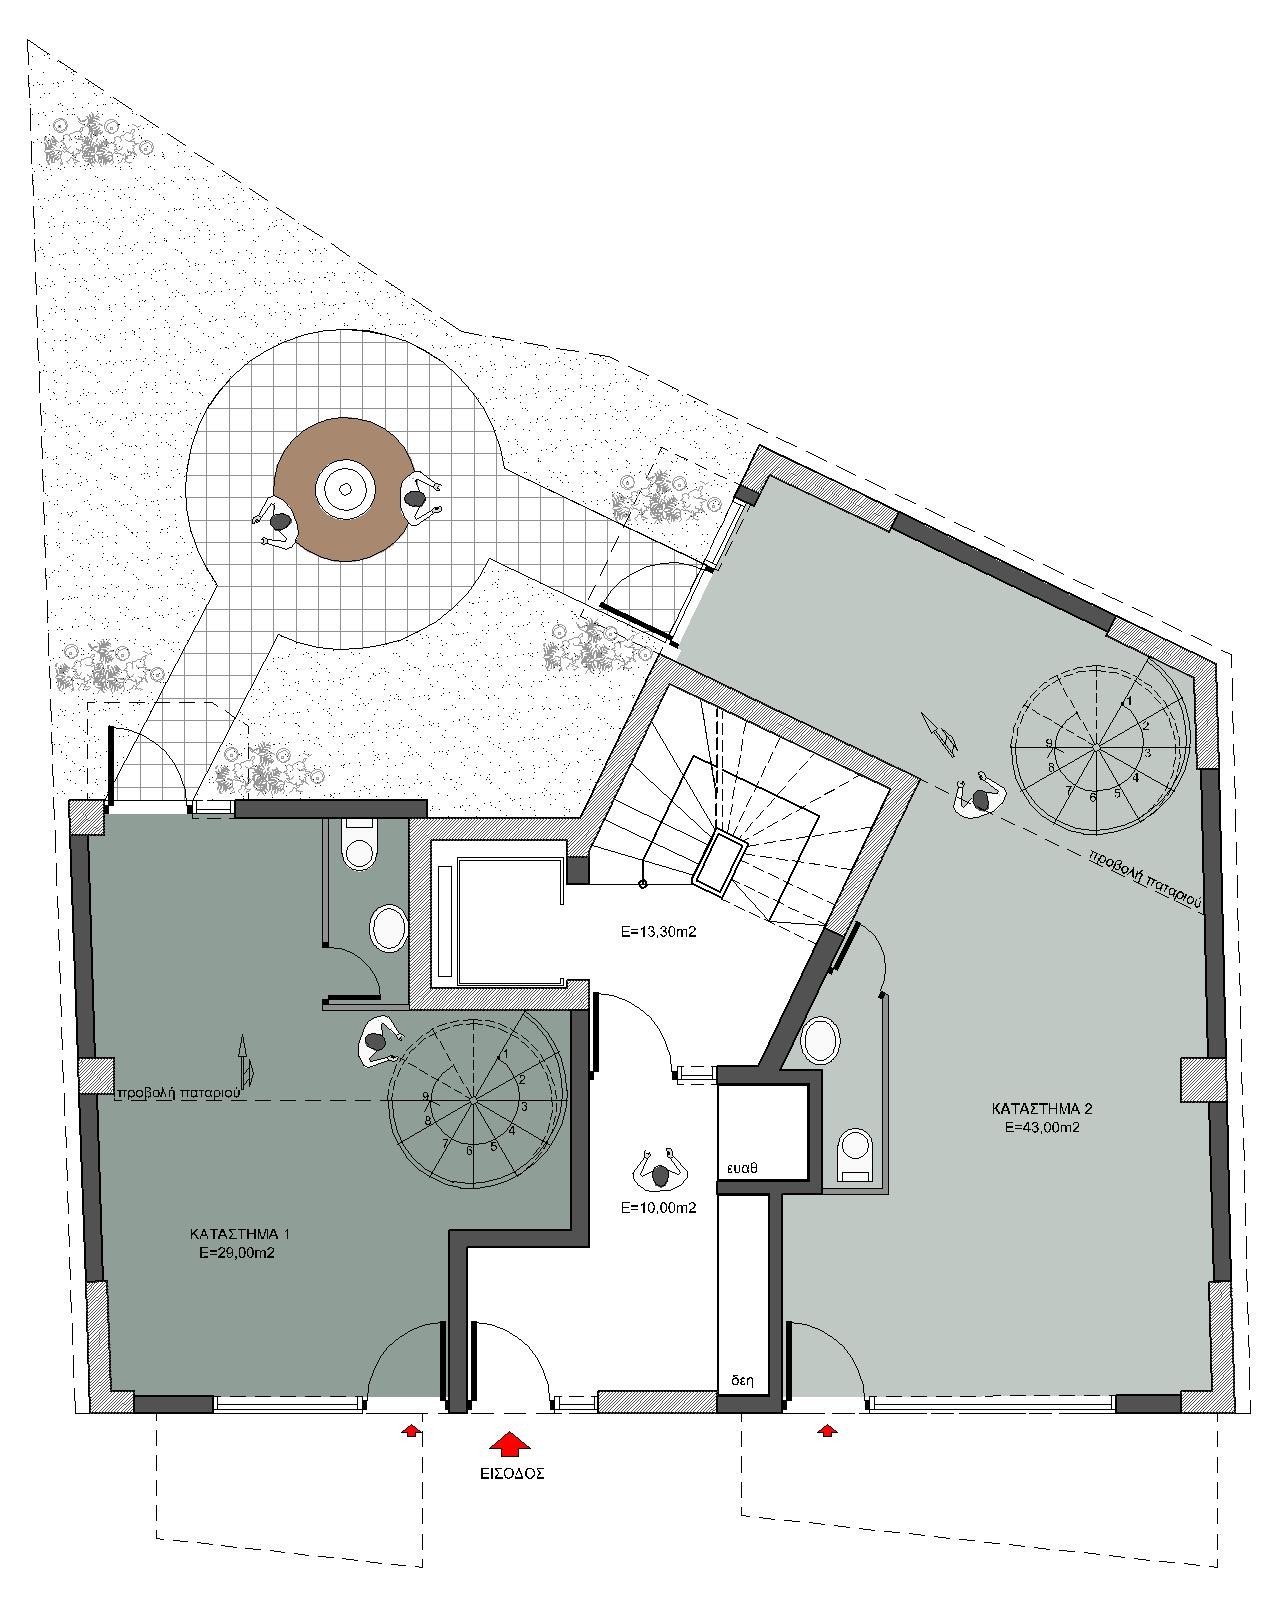 Ground floor plan - Κάτοψη ισογείου